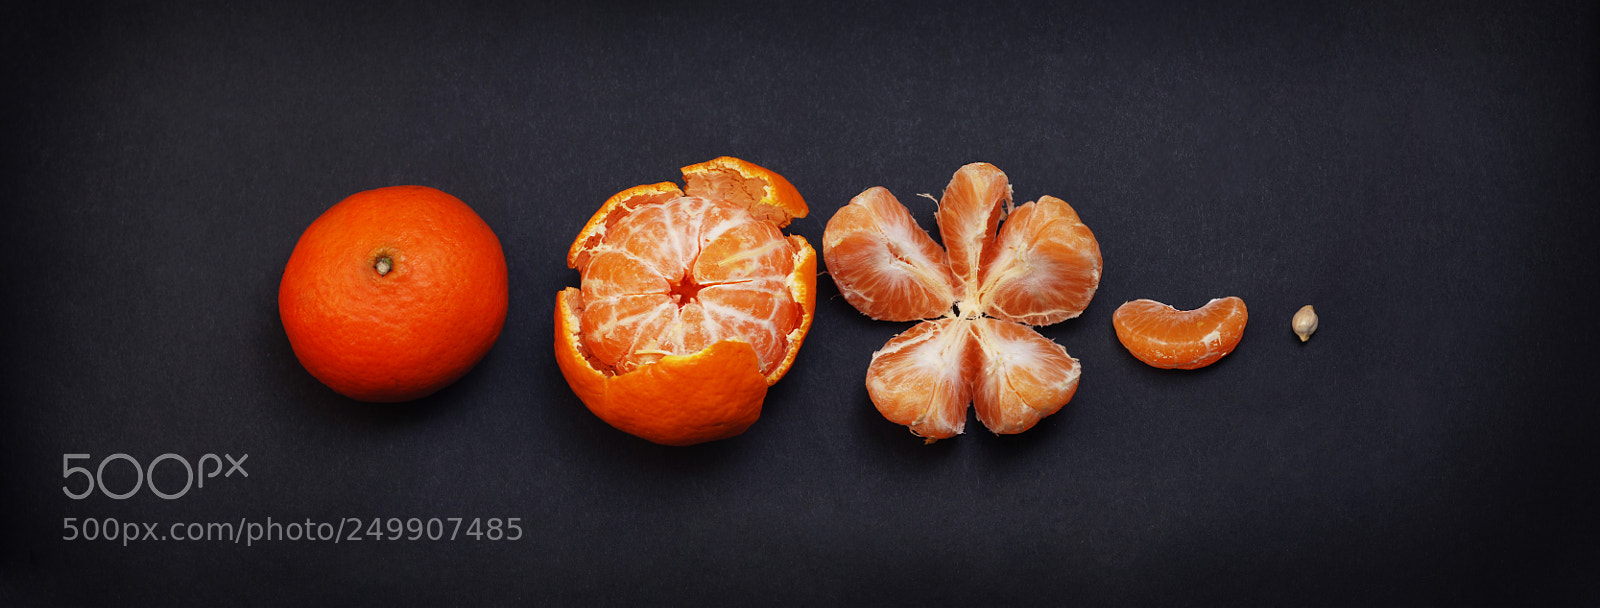 Nikon D80 sample photo. Juicy citrus fruits on photography